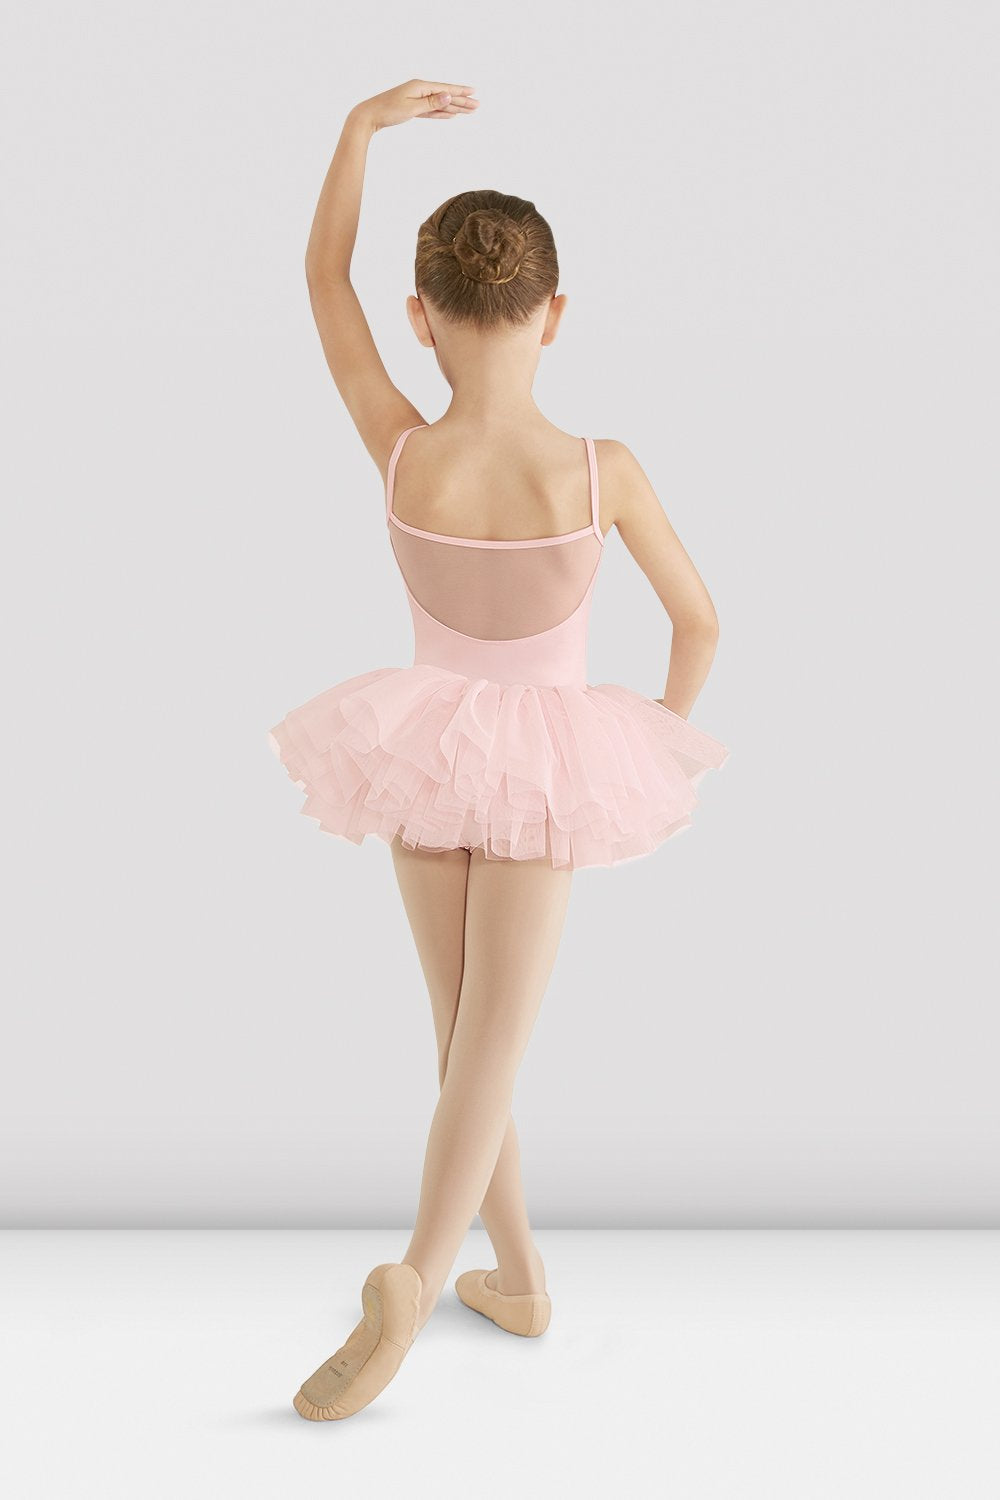 Maillot ballet a 2 colores